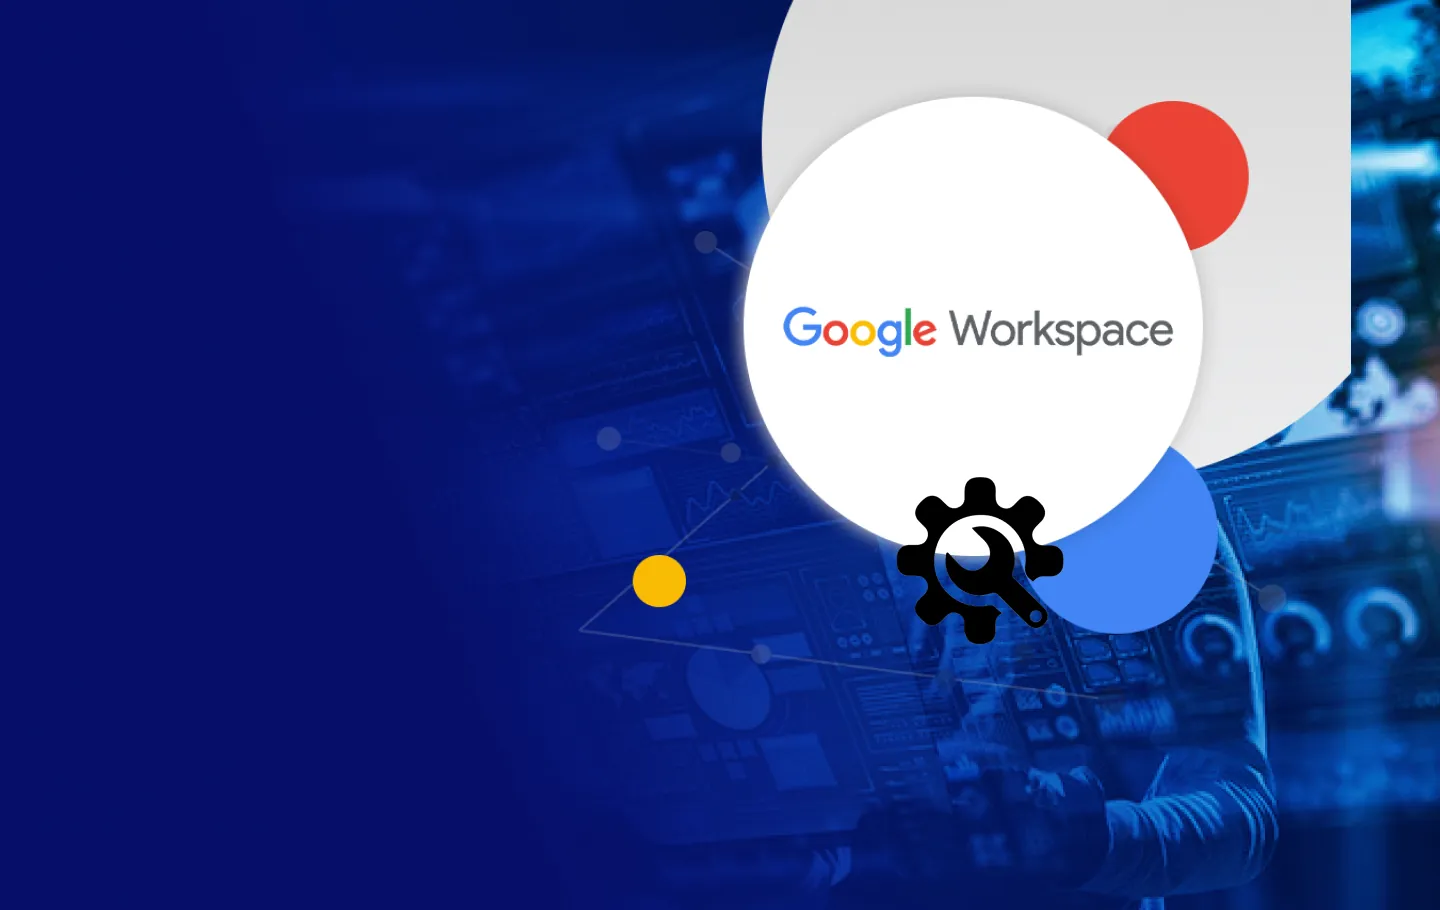 Google Workspace written on a blue background